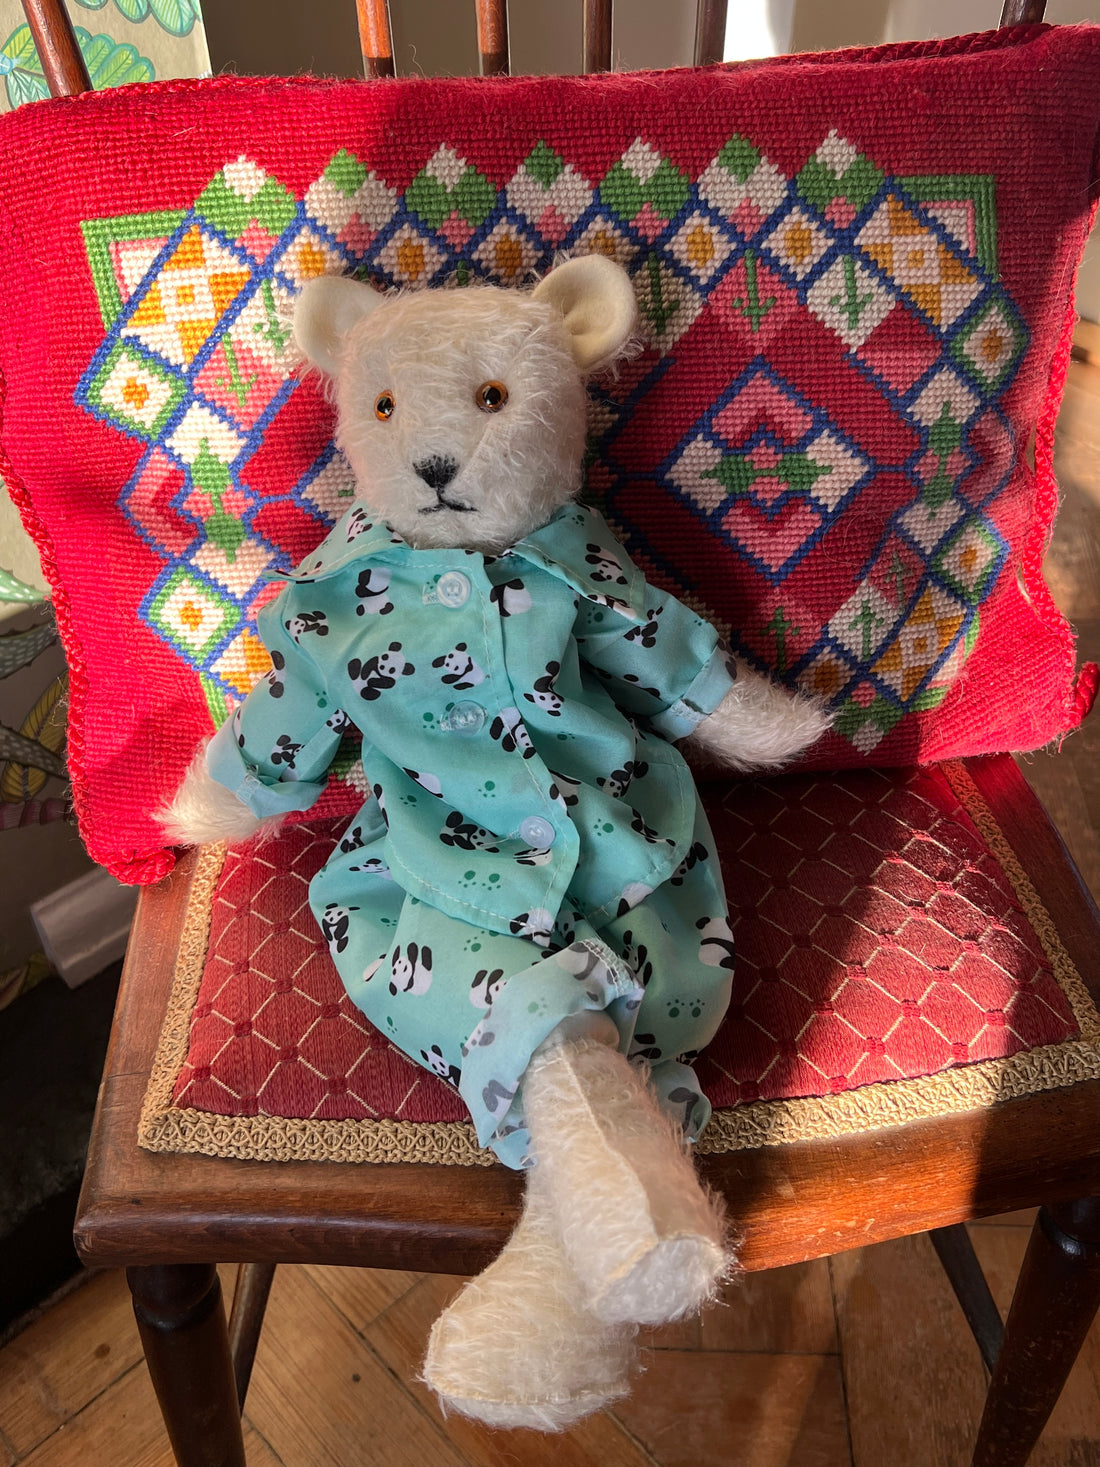 Meet Brewis - a new bear waiting for handmade clothes!